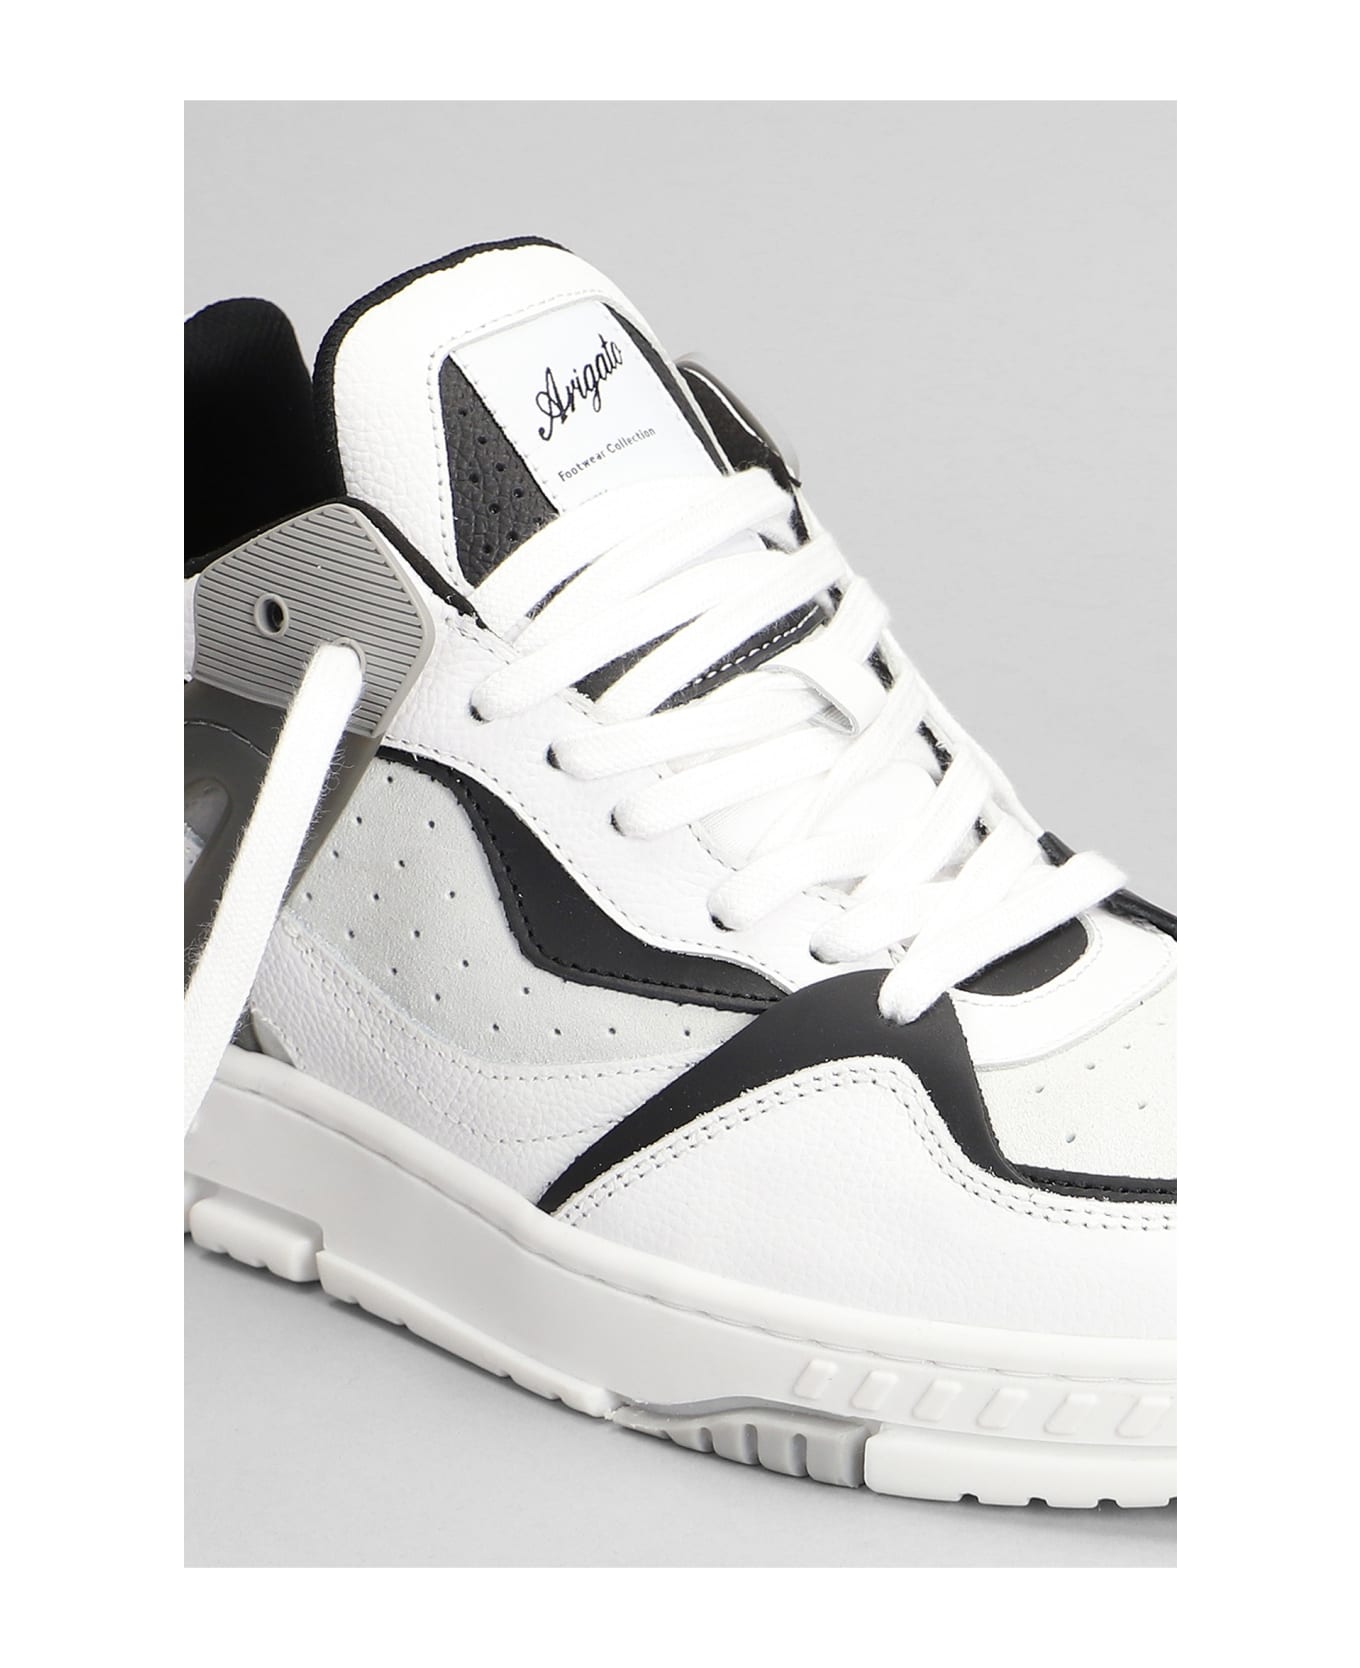 Axel Arigato Astro Sneakers In White Leather - white スニーカー